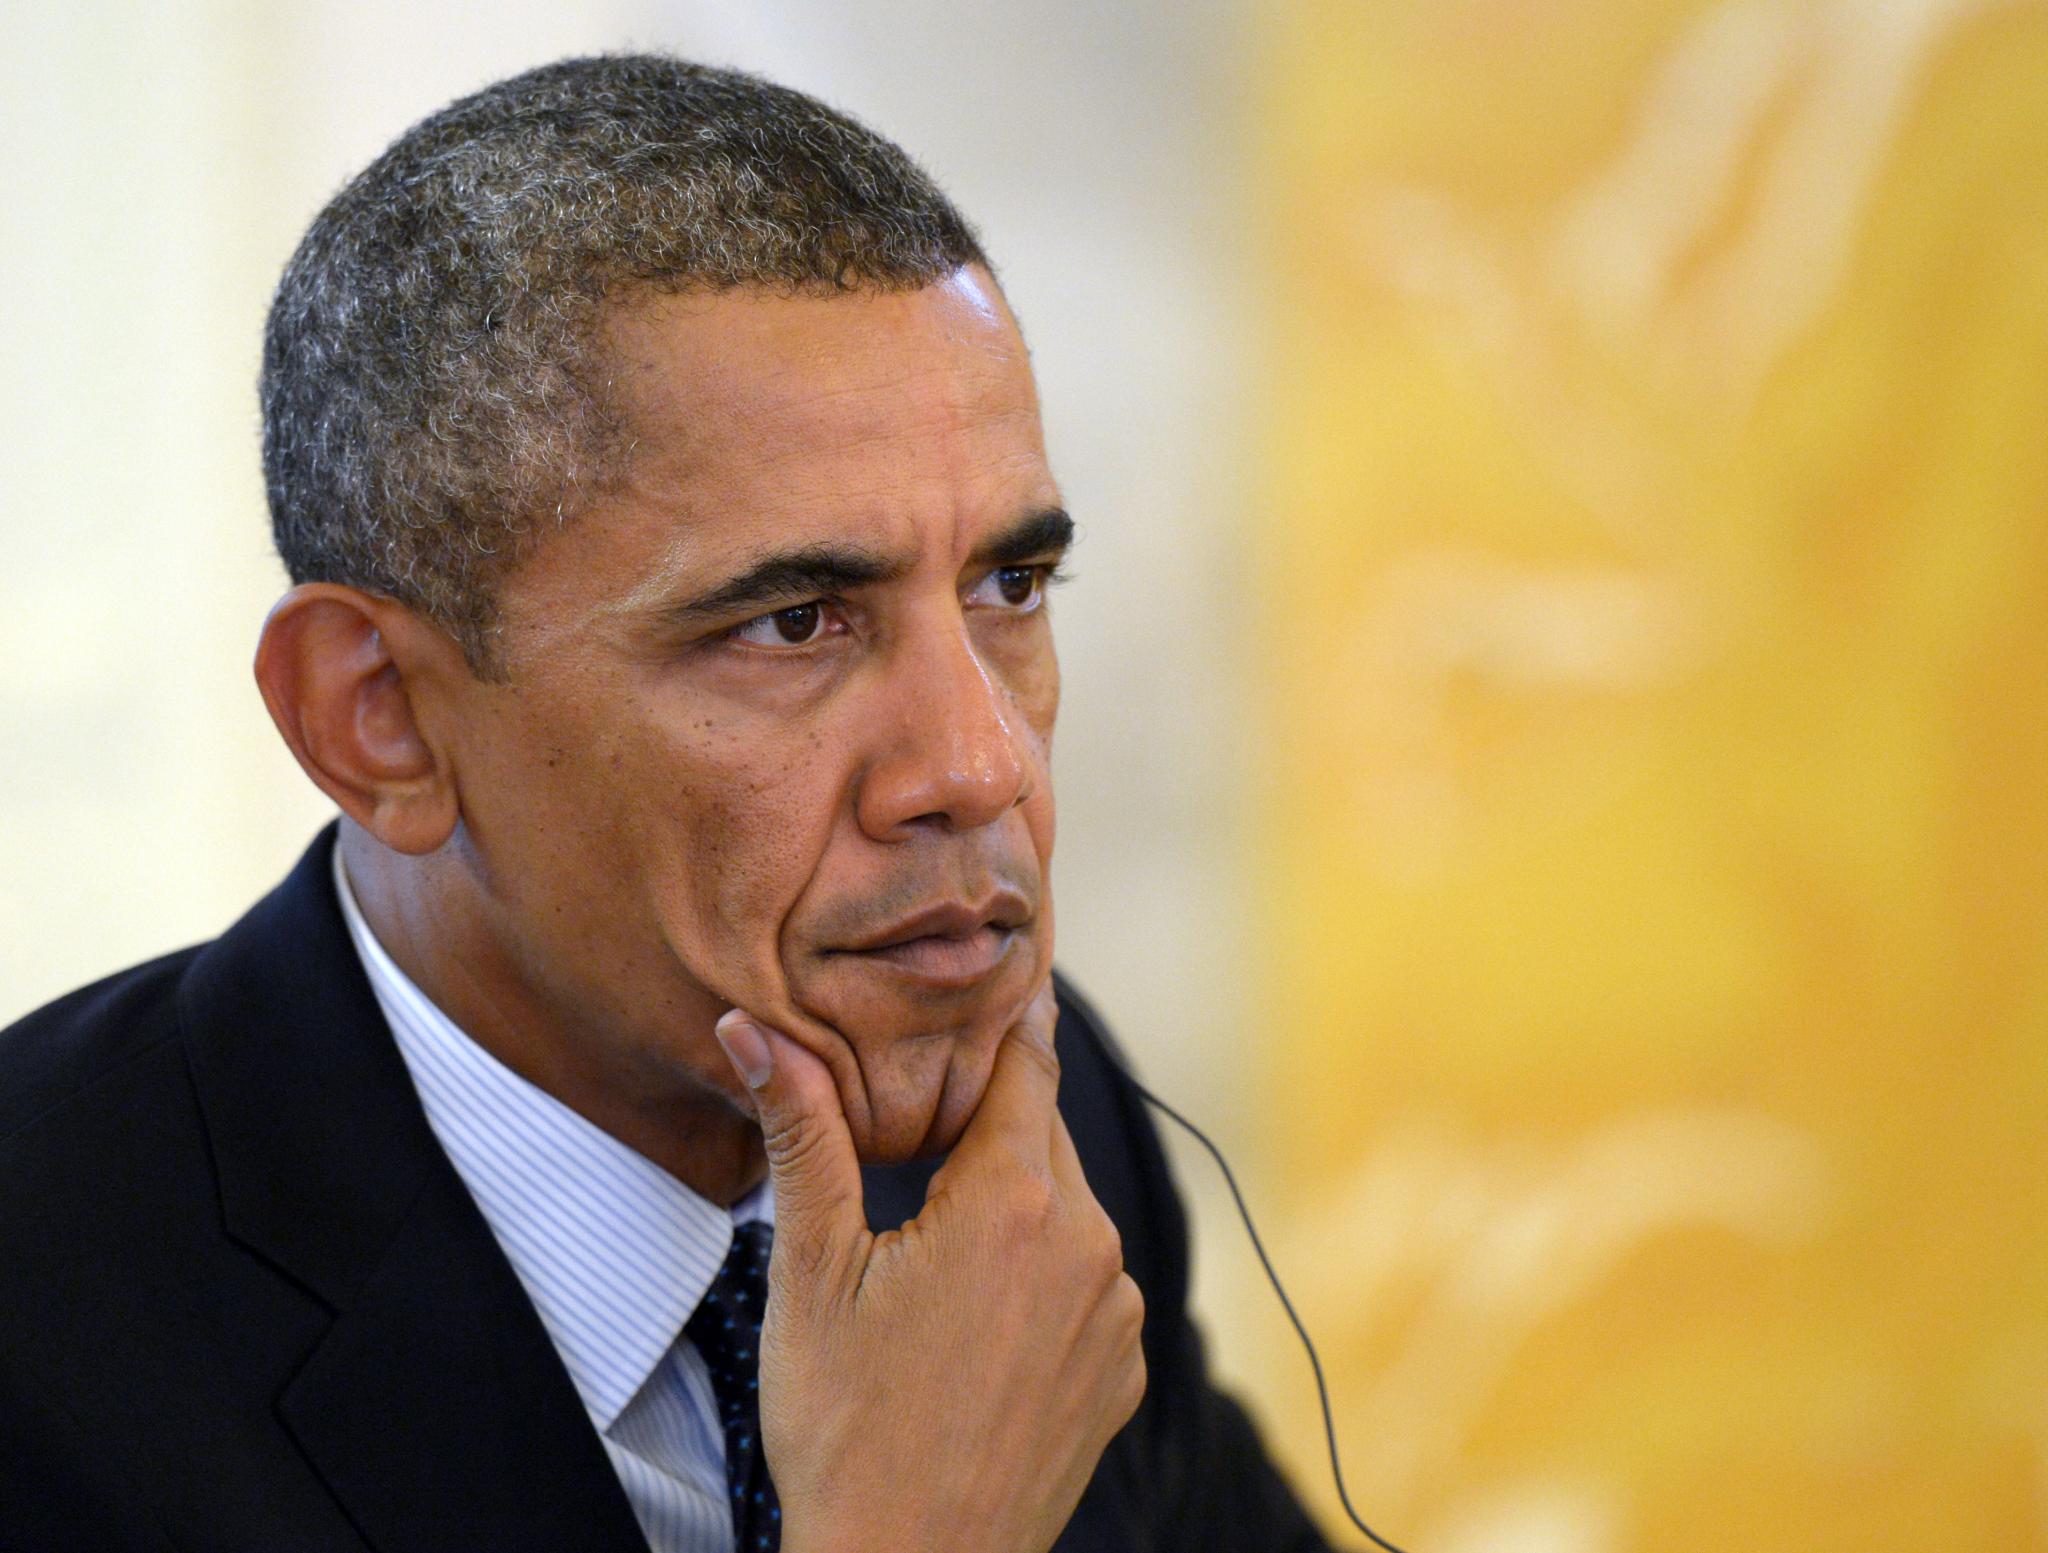 President Obama to Address the Nation Tonight on Syria
